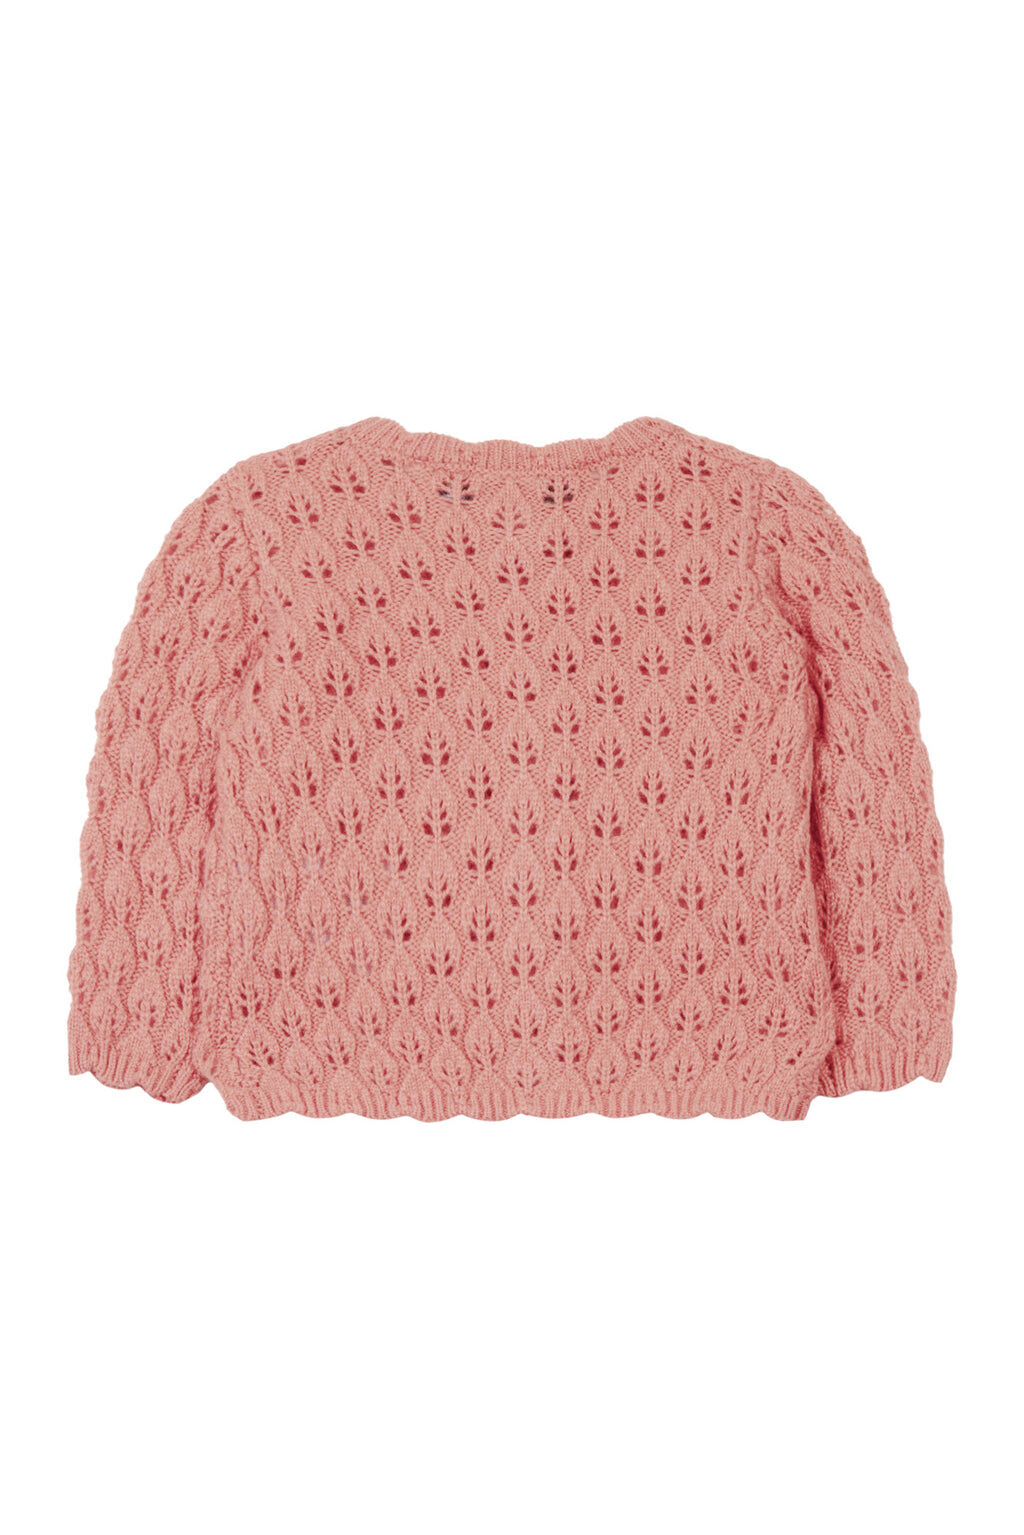 Cardigan - Old Pink Knitwear openwork